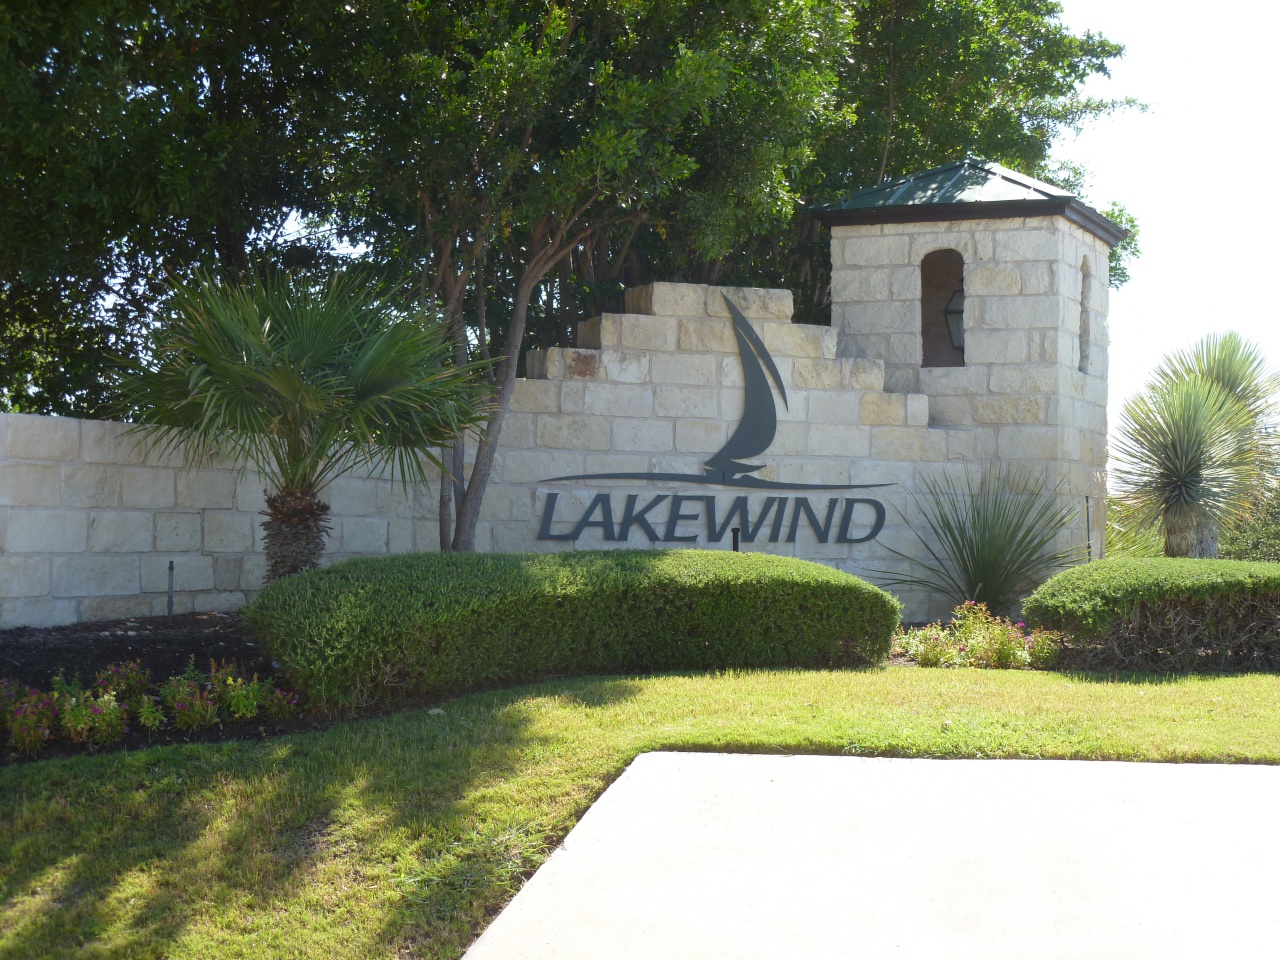 lakewind estates northwest Austin neighborhood guide